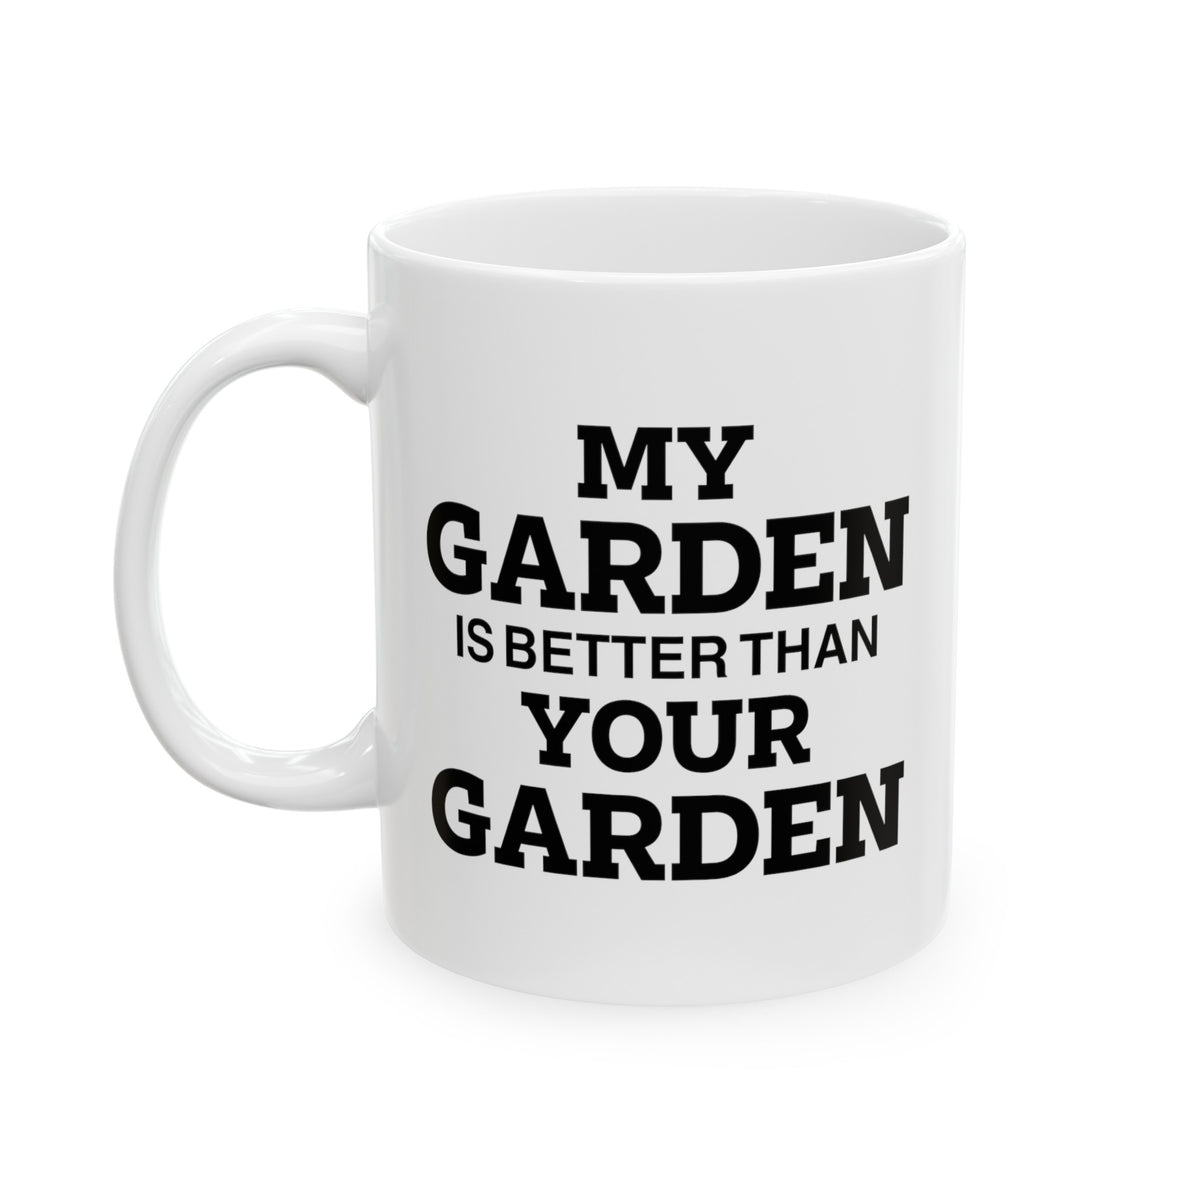 My Garden Is Better Than Your Garden - Coffee Mug For Gardening